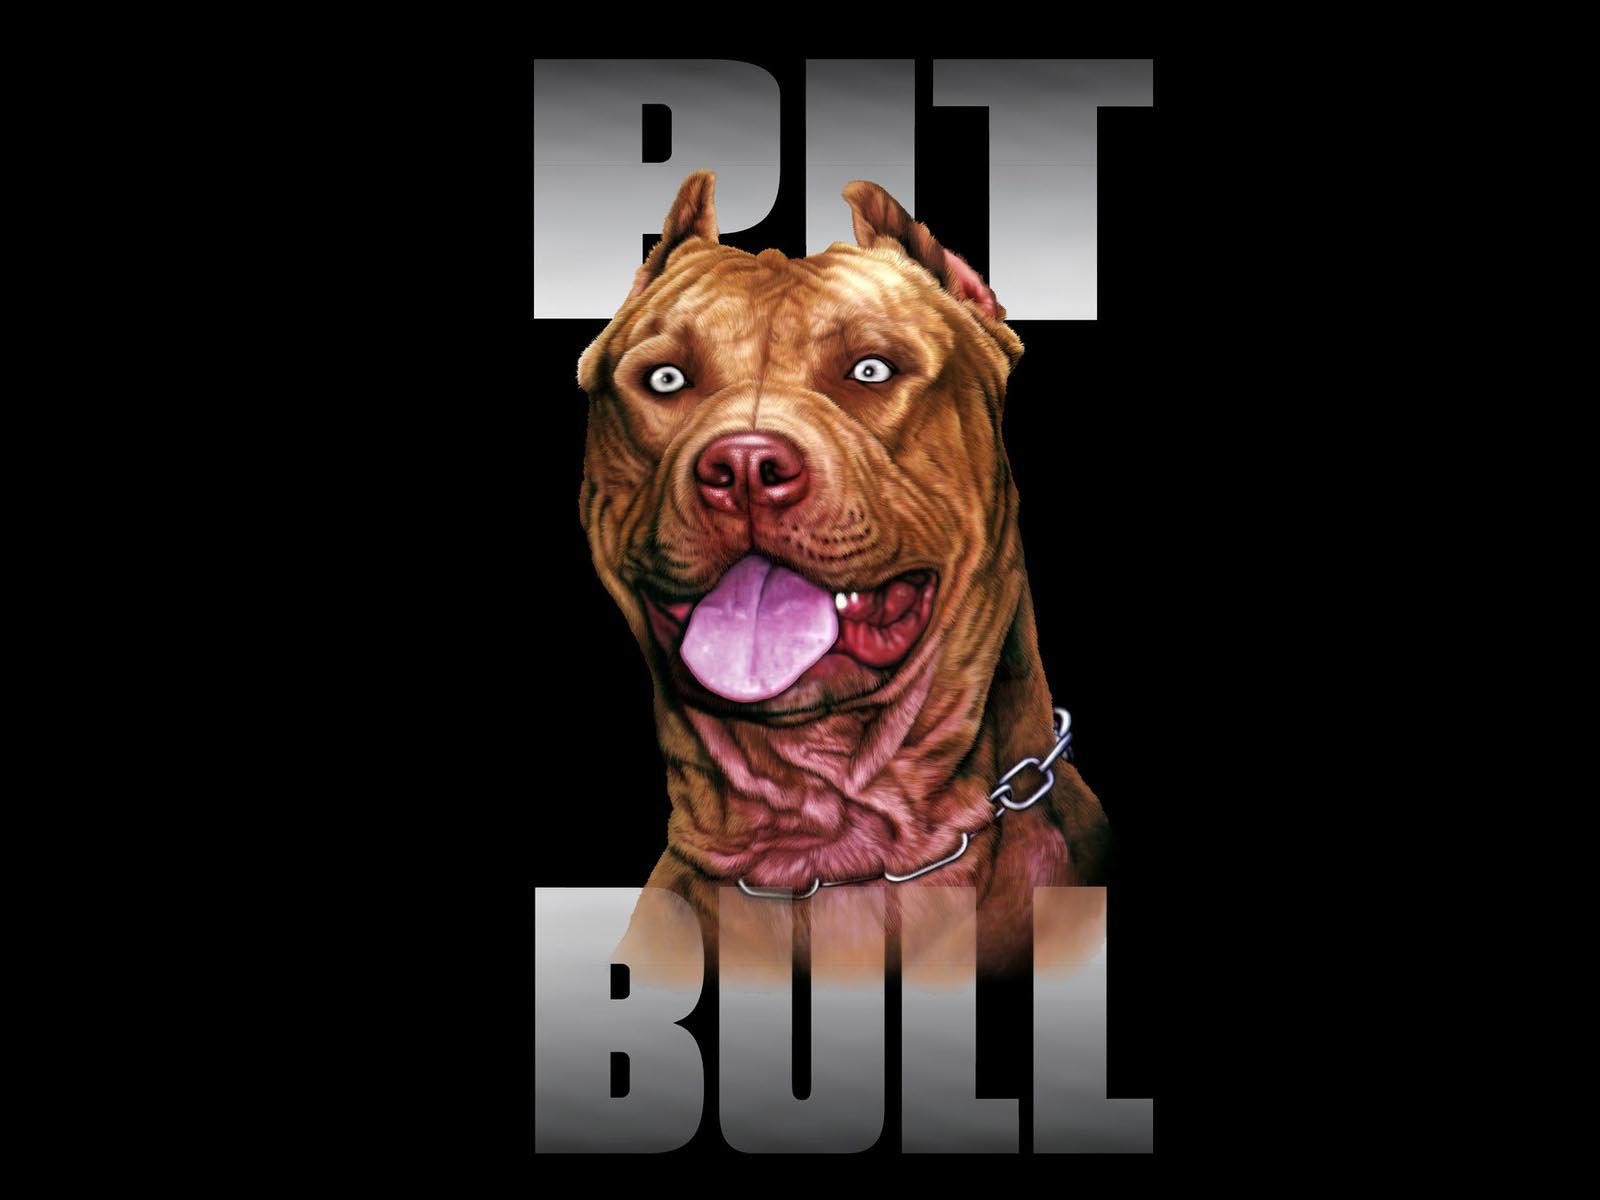 Pitbull Dog Wallpapers - Wallpaper Cave